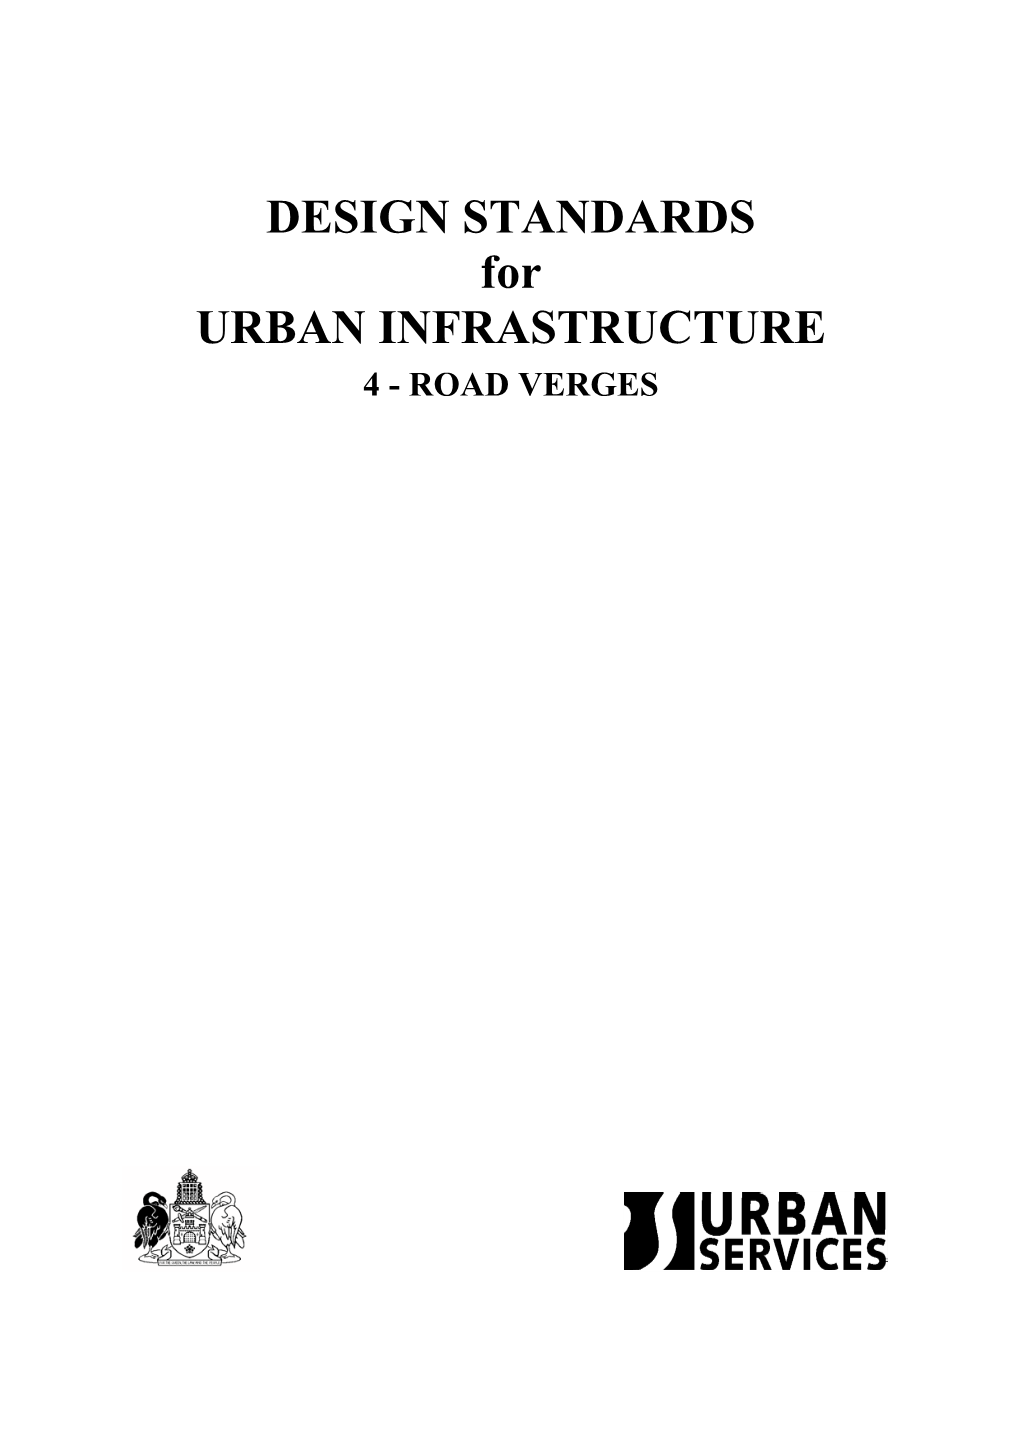 DESIGN STANDARDS for URBAN INFRASTRUCTURE 4 - ROAD VERGES